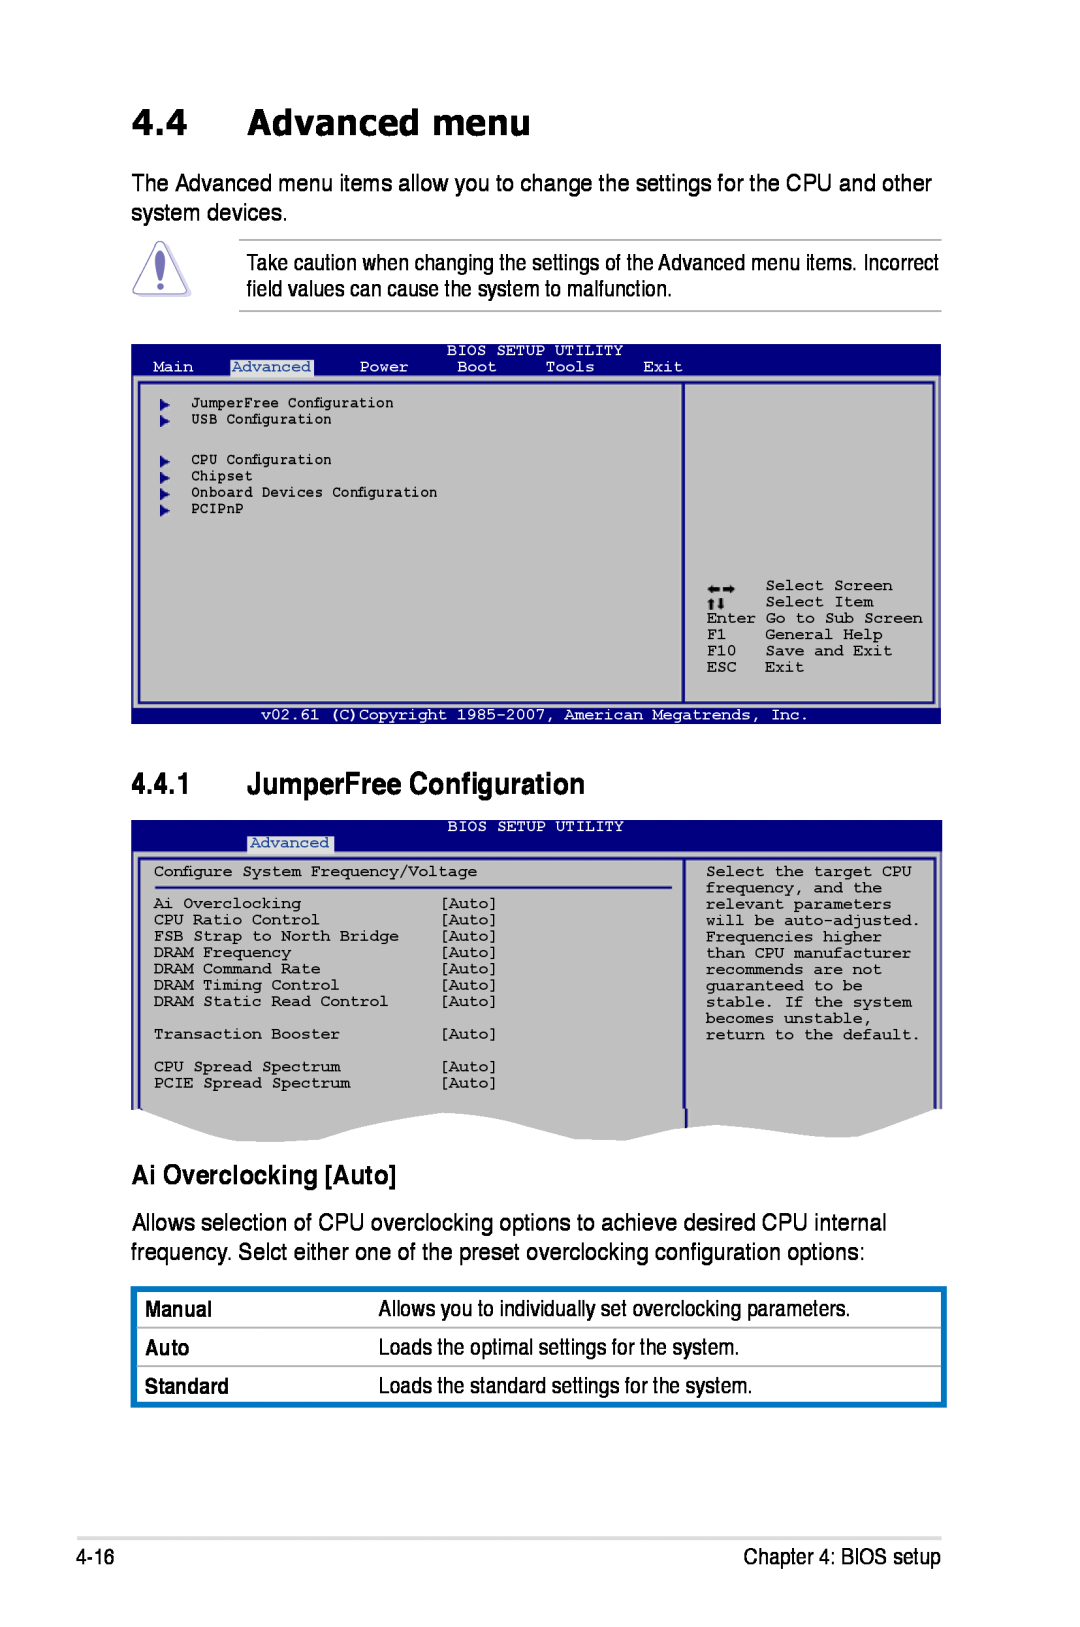 Asus P5K/EPU manual Advanced menu, JumperFree Configuration, Ai Overclocking Auto, Manual, Standard 